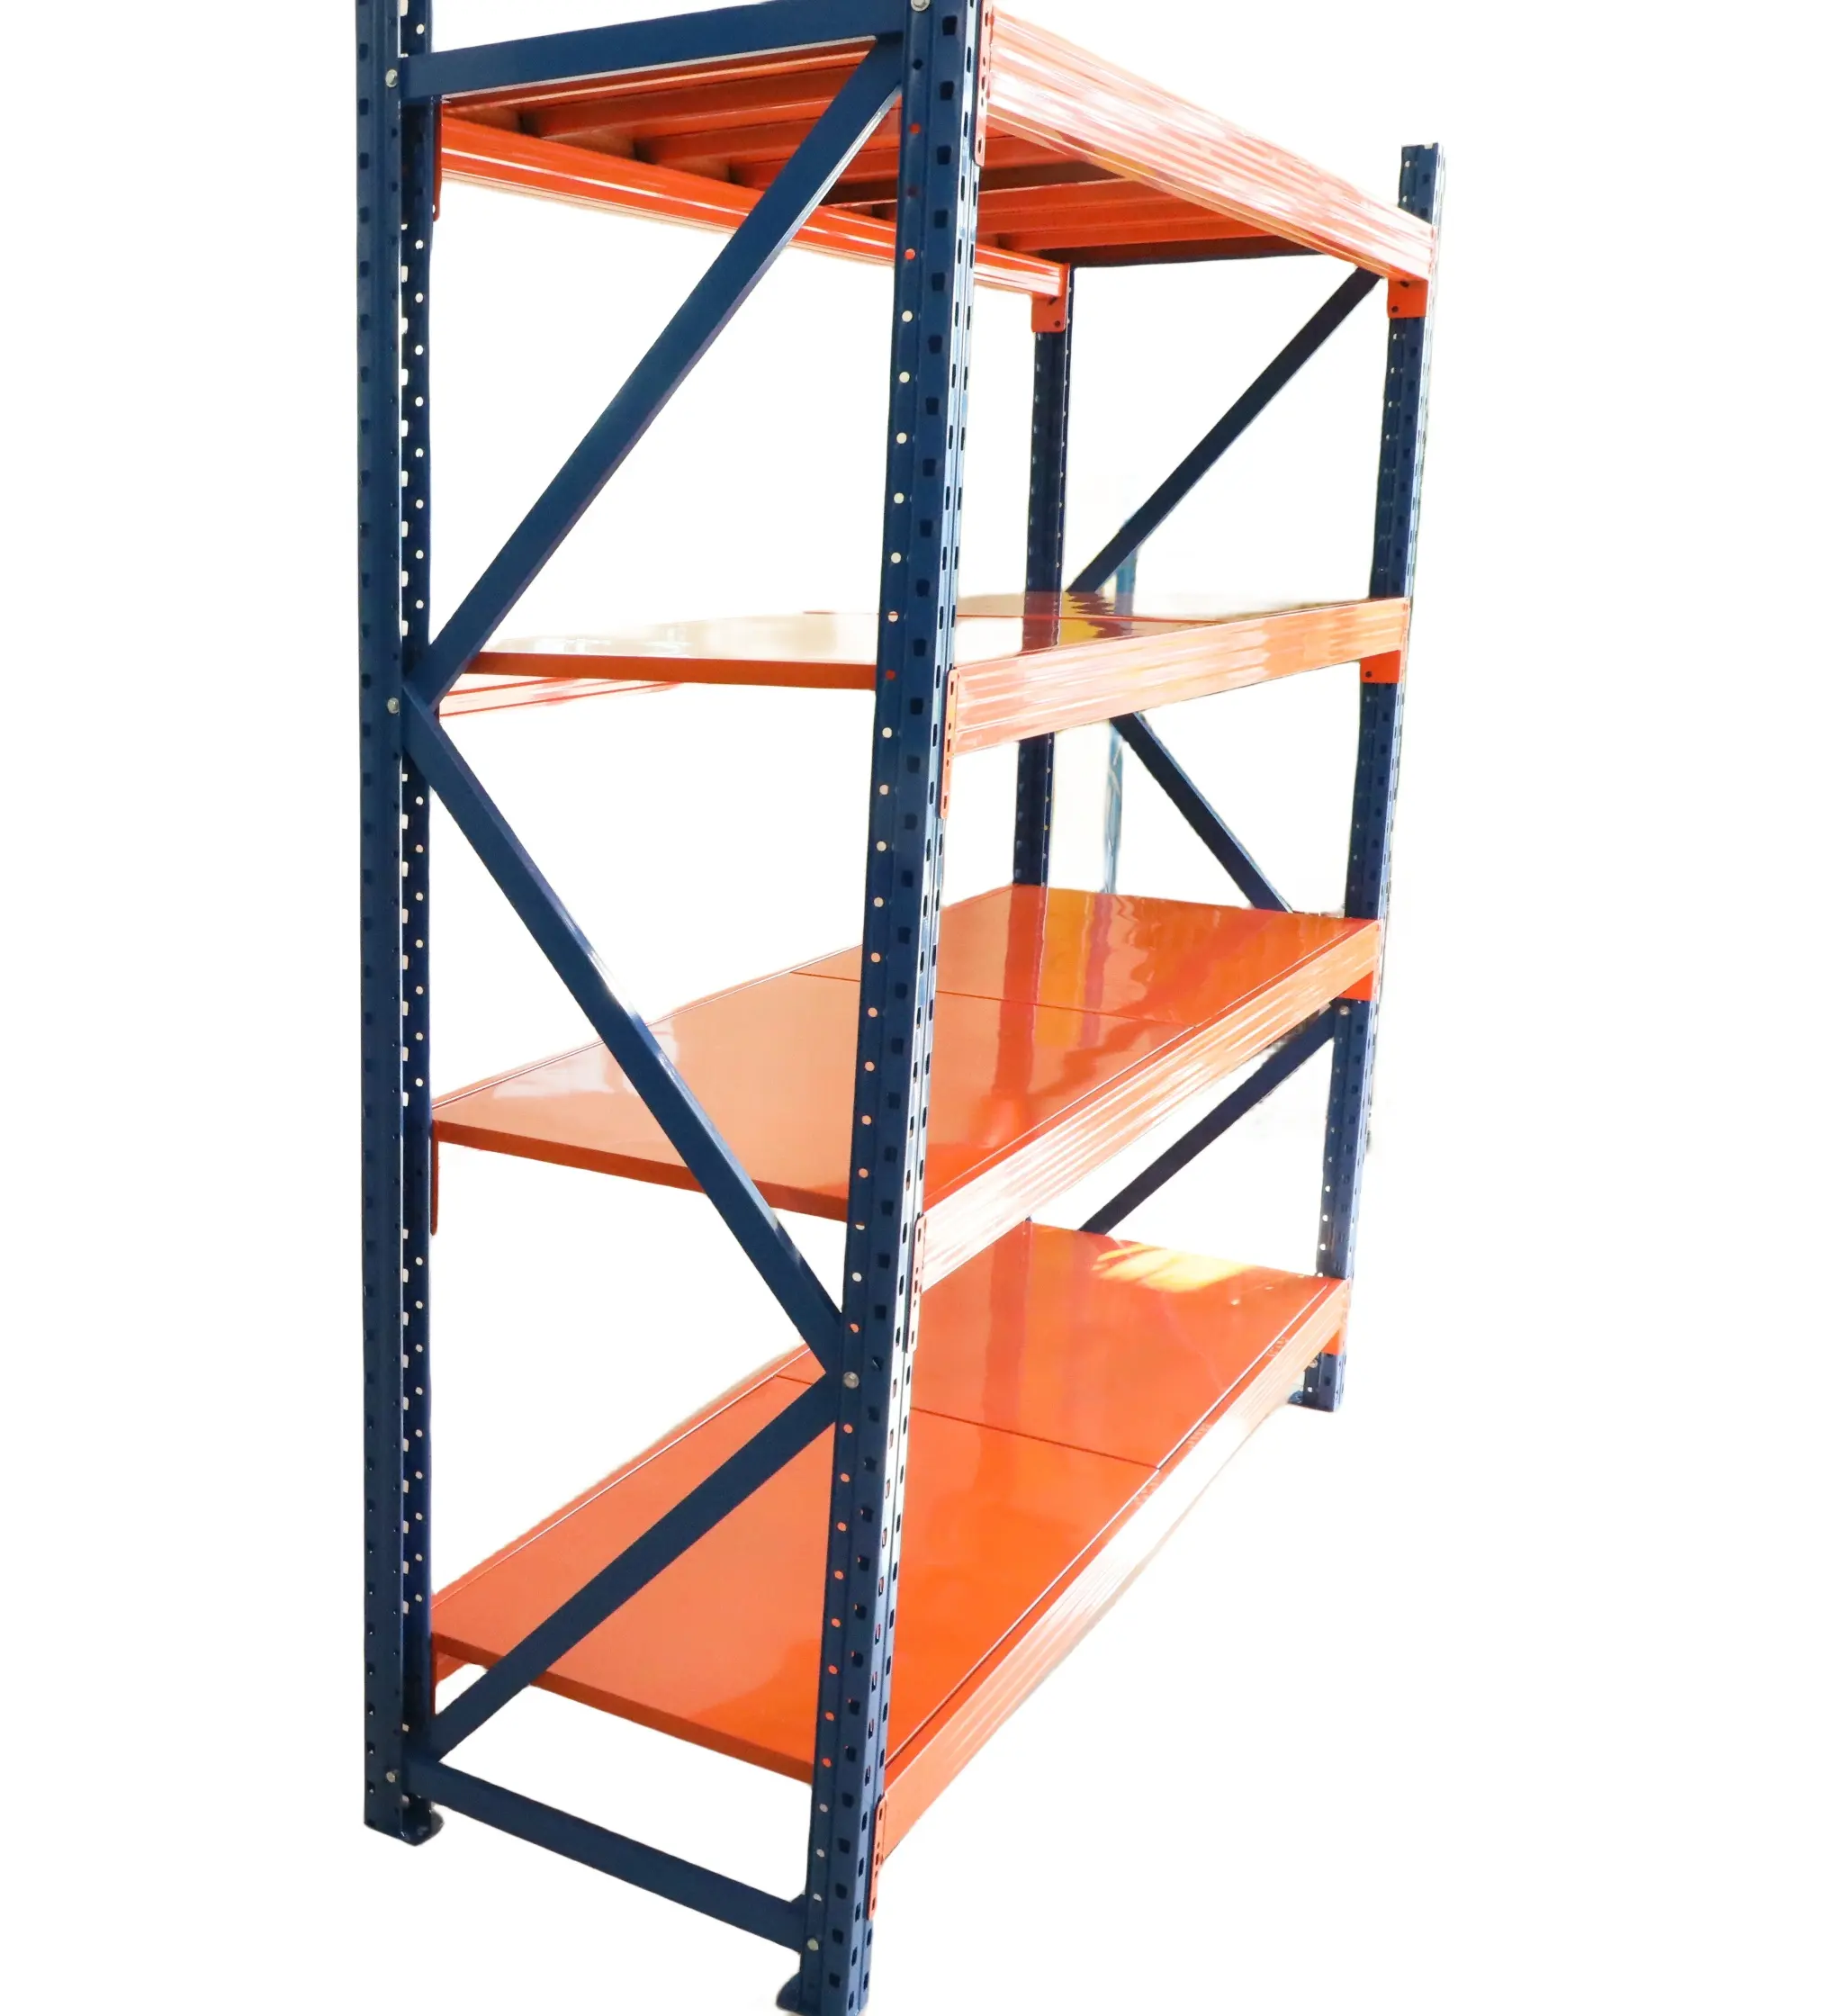 Warehouse Shelving Storage Equipment Heavy Duty Rack Shelf Stacking Pallet Rack for Garage or Warehouse Used